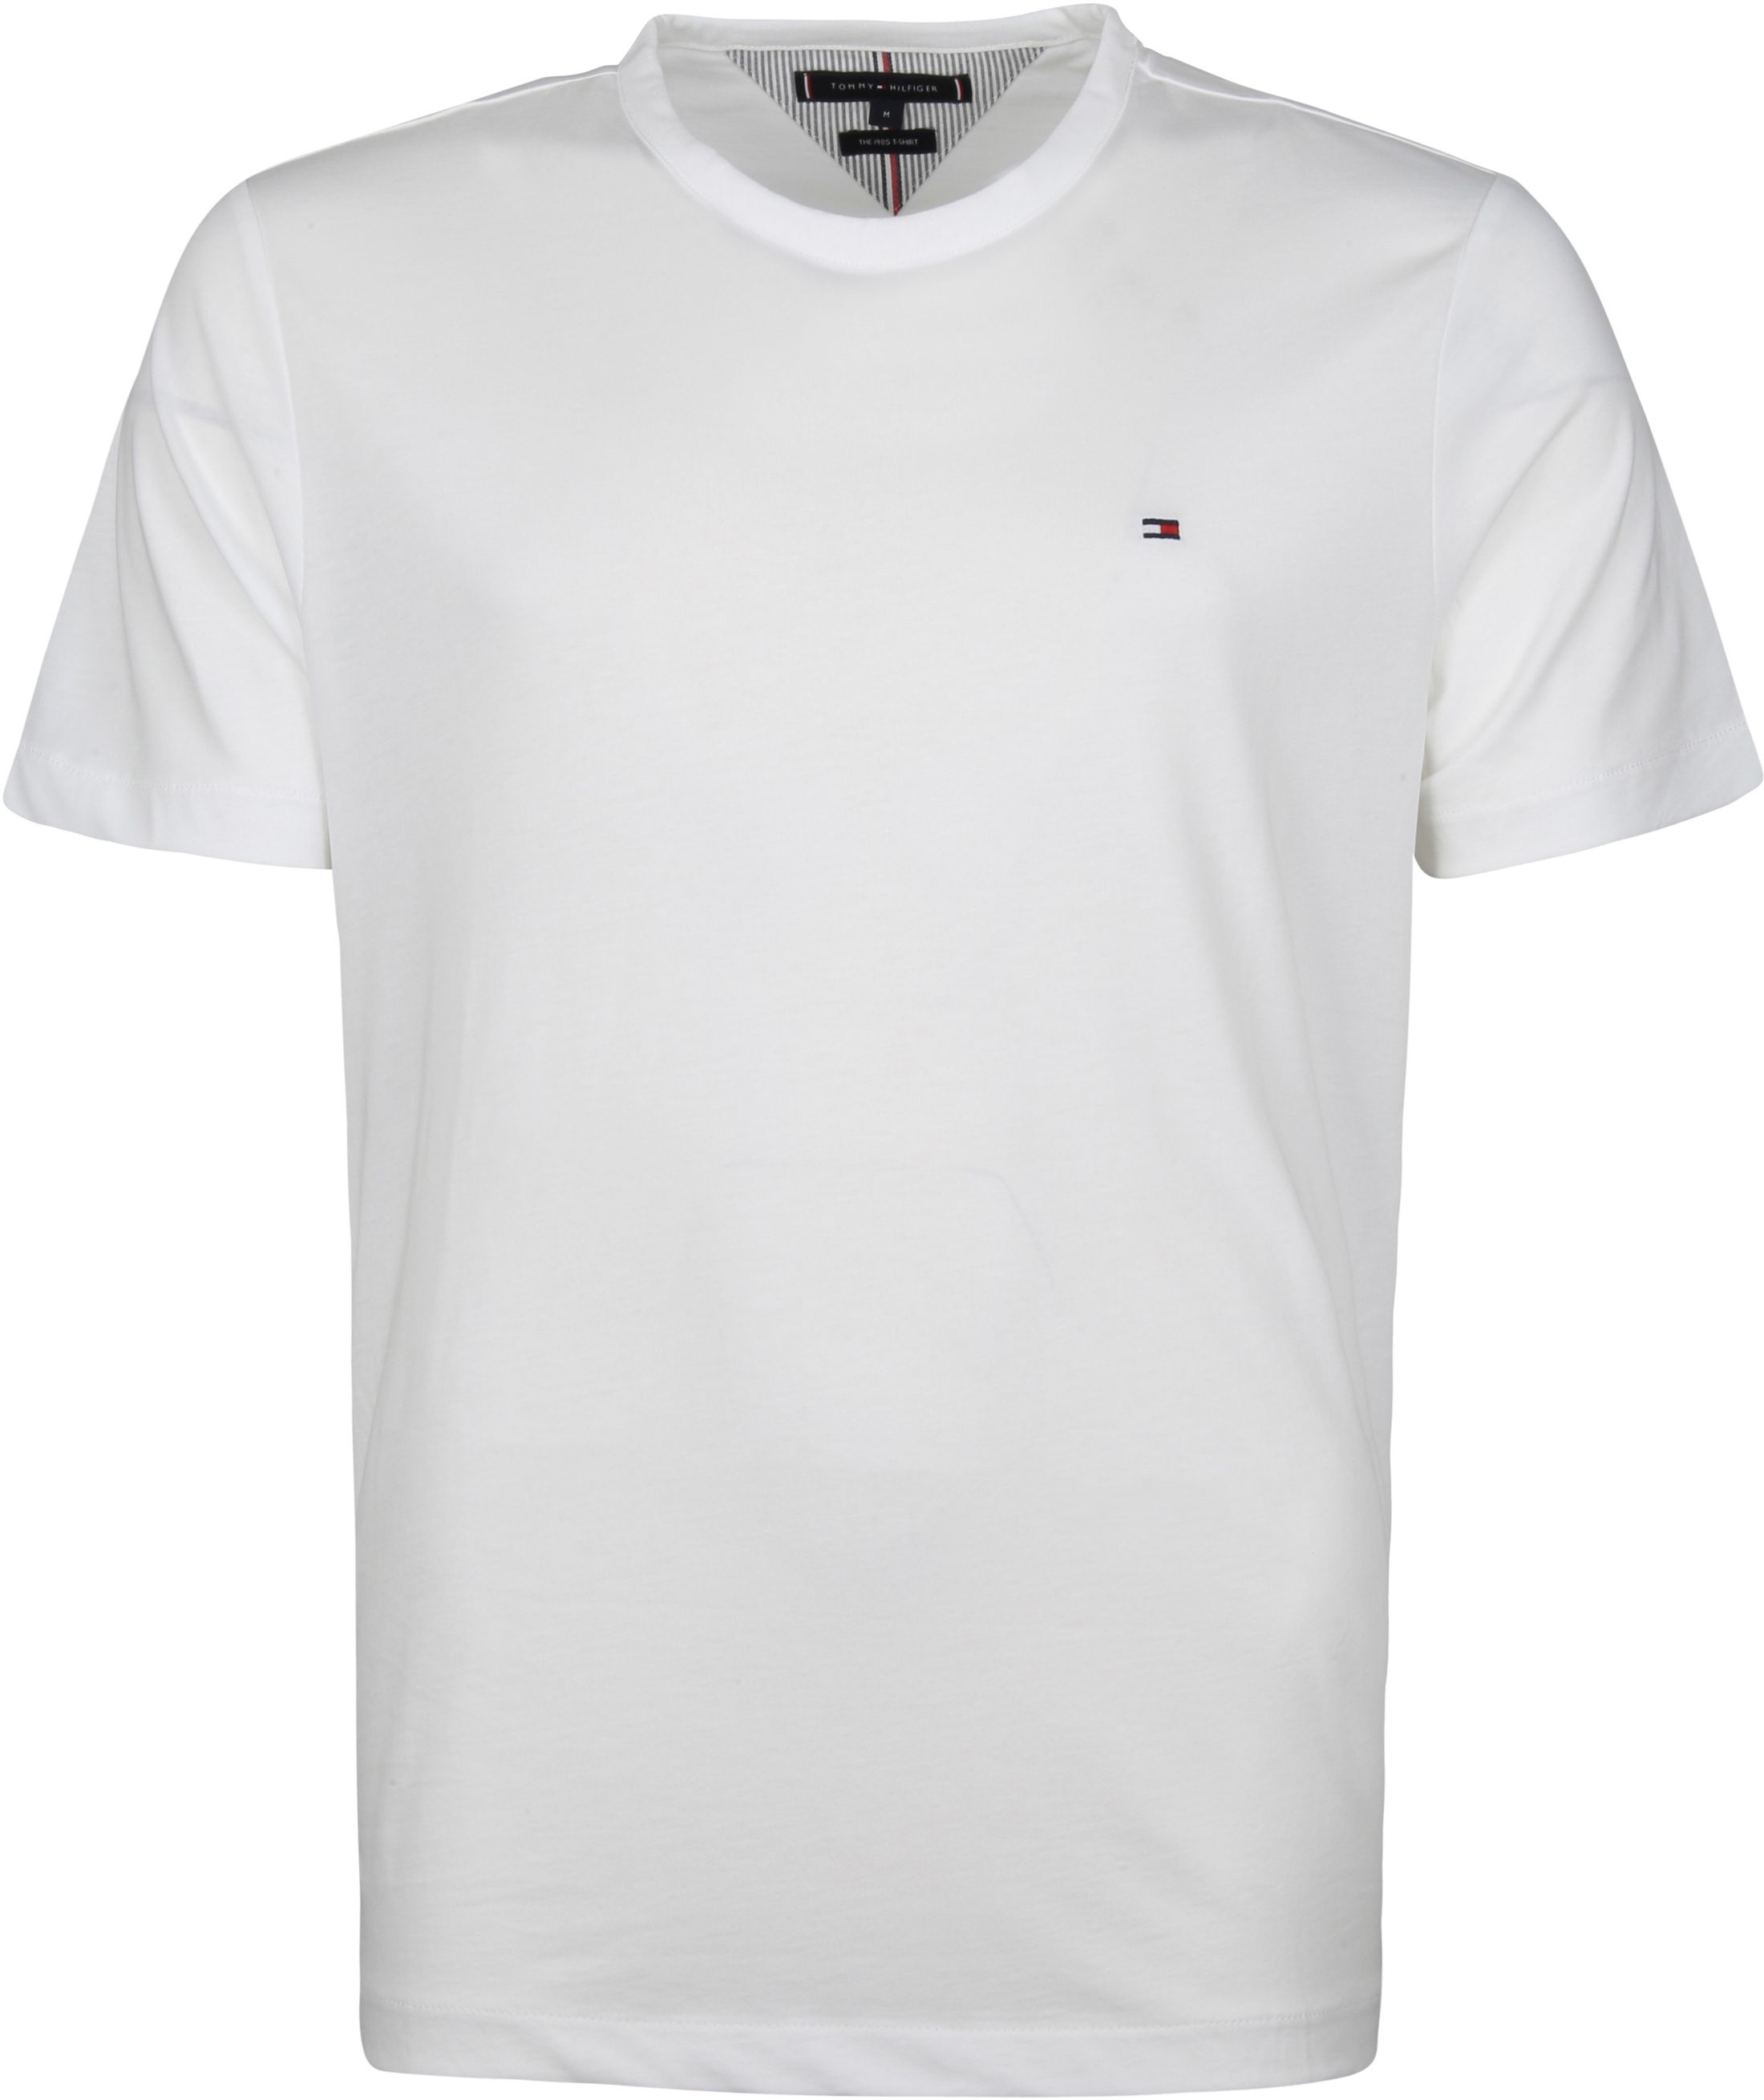 Tommy Hilfiger T-shirt 1985 White size L